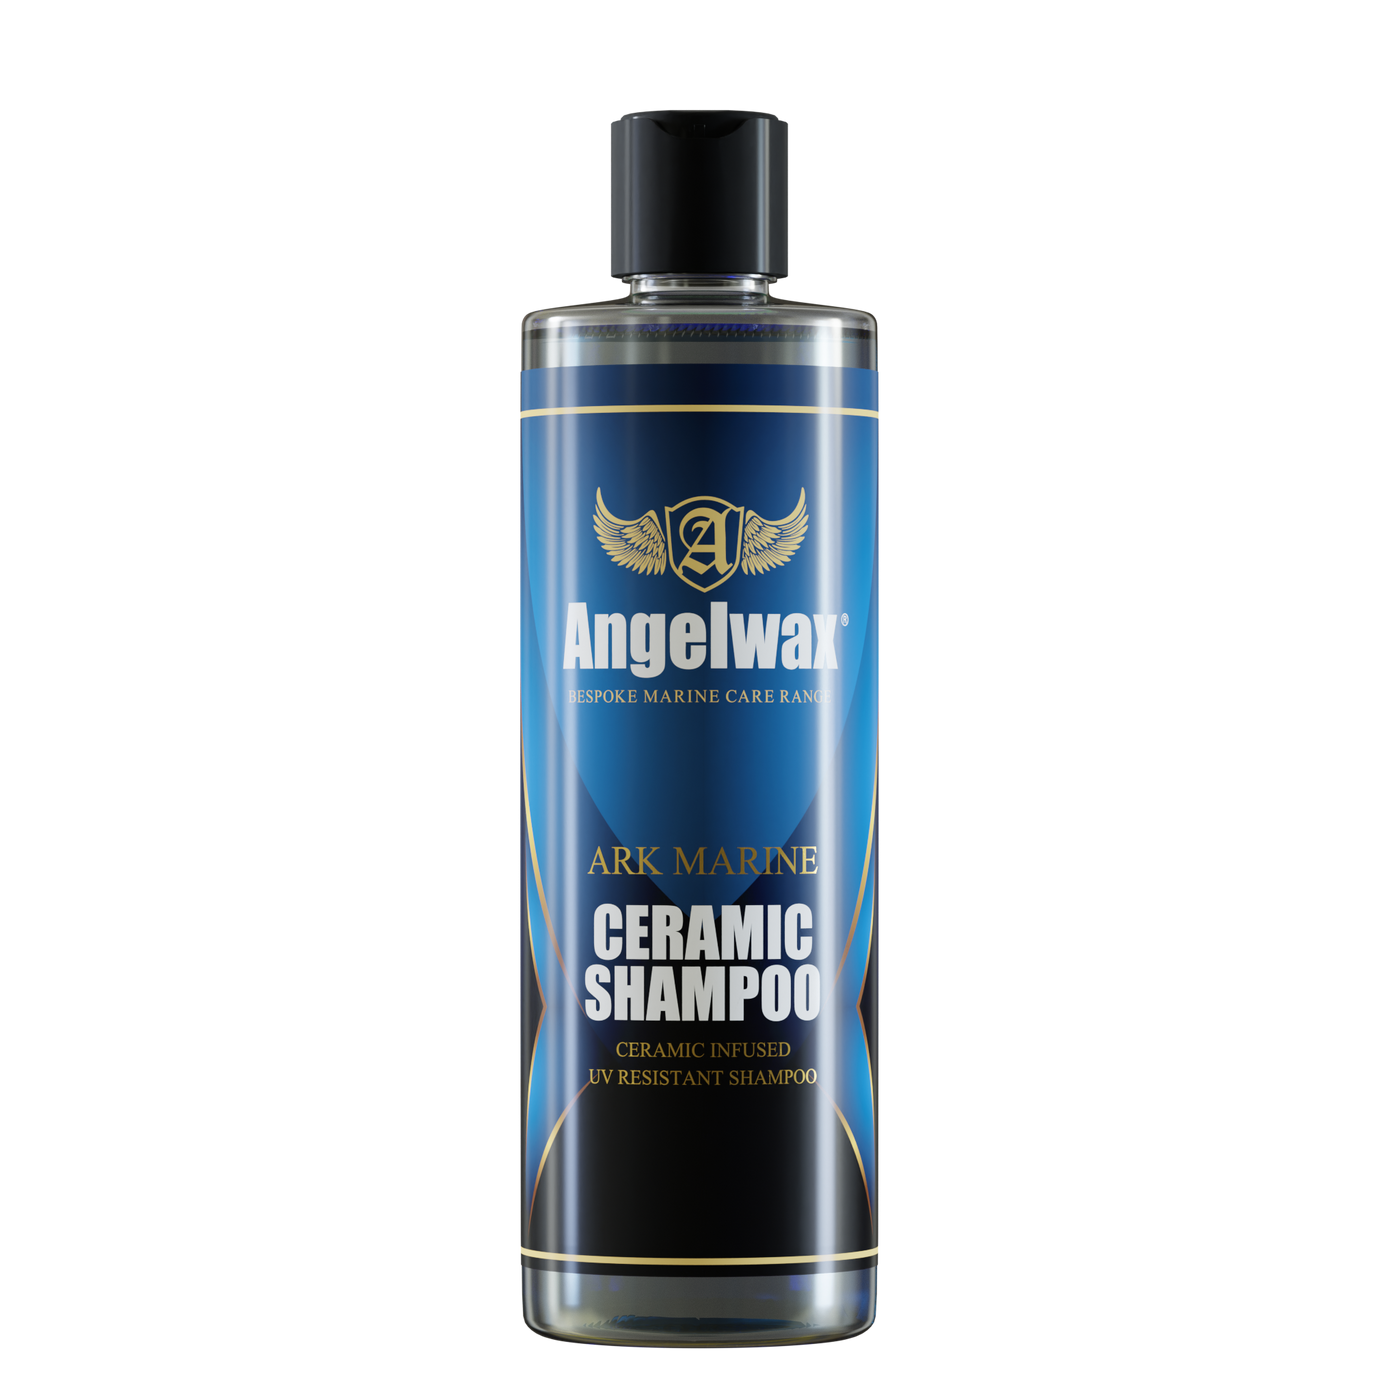 Ark Marine keramische shampoo